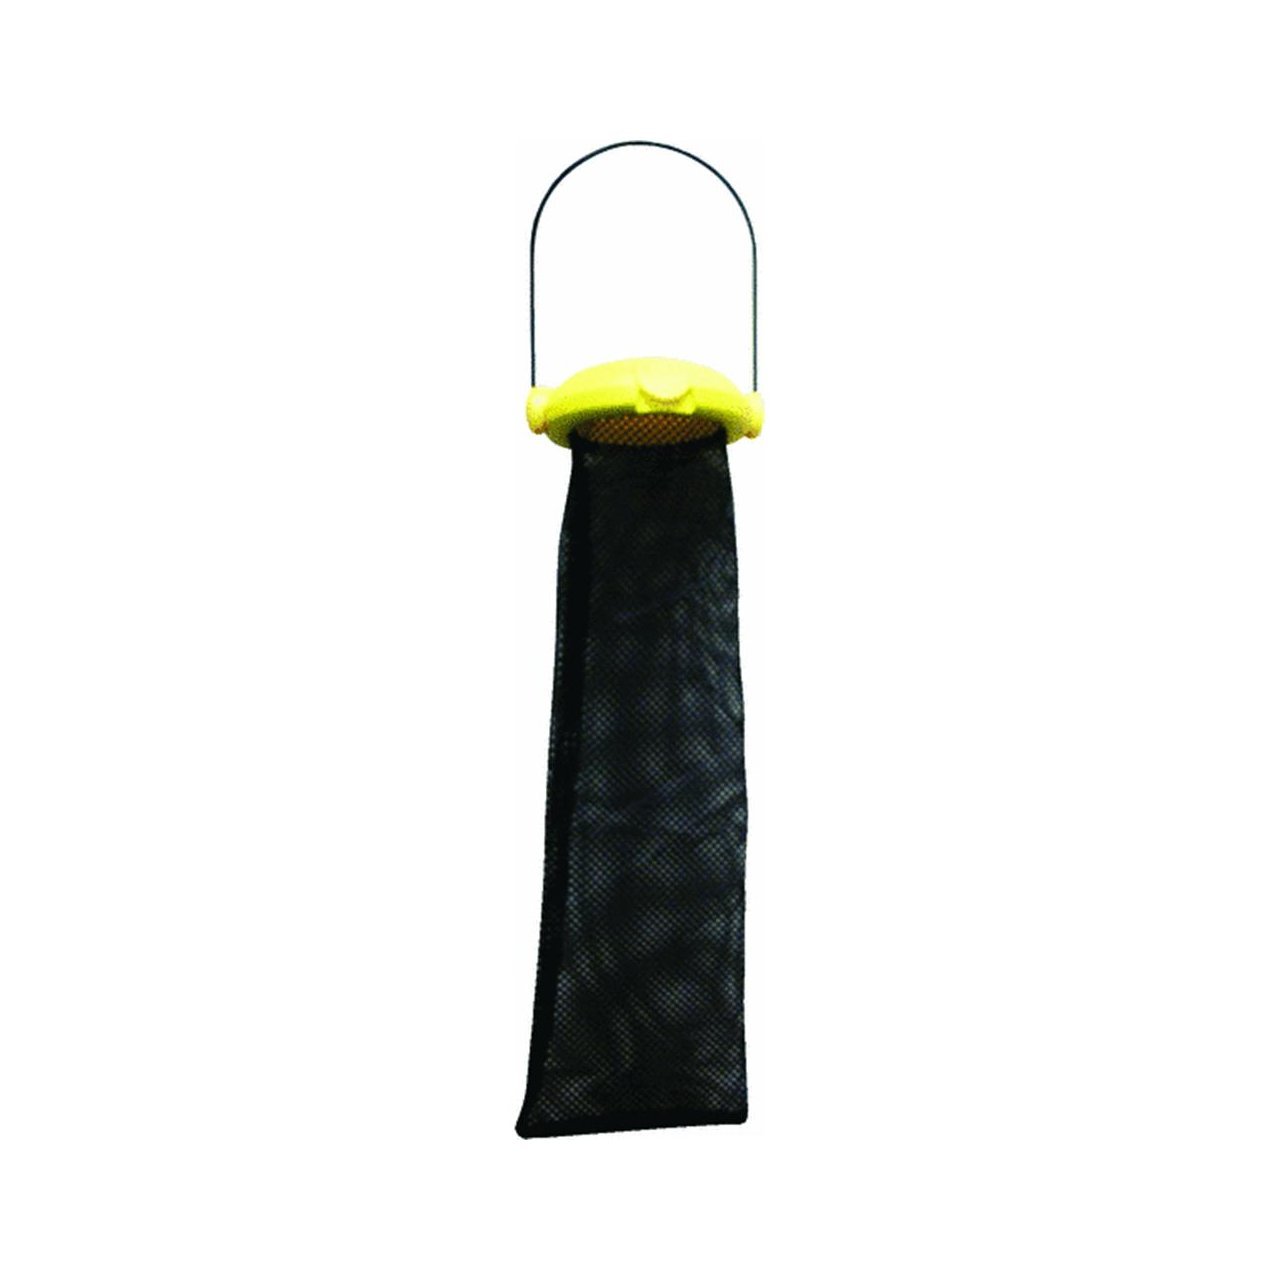 Gardman Yellow Fip Top Thistle Feeder Mesh Bag - 3.5" wide x 11" high